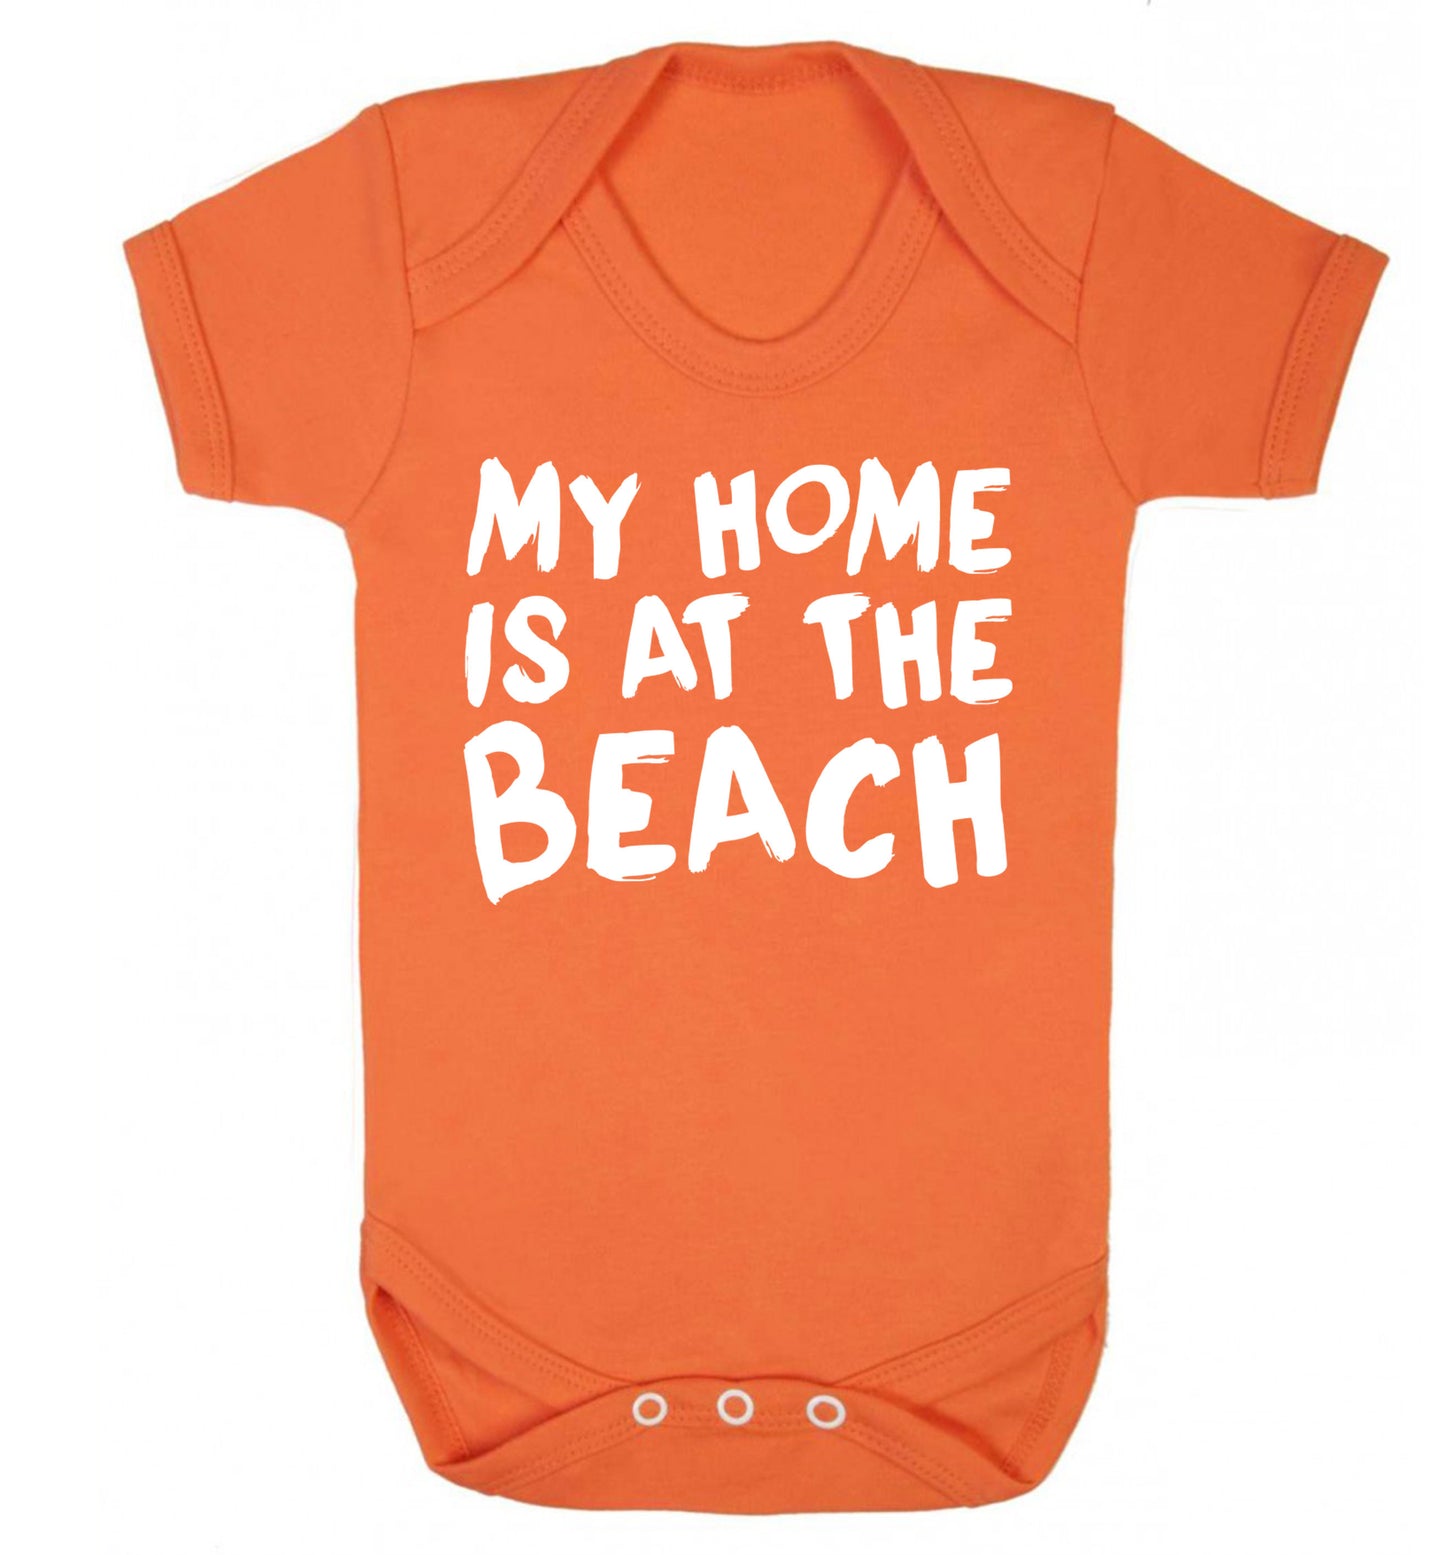 My home is at the beach Baby Vest orange 18-24 months